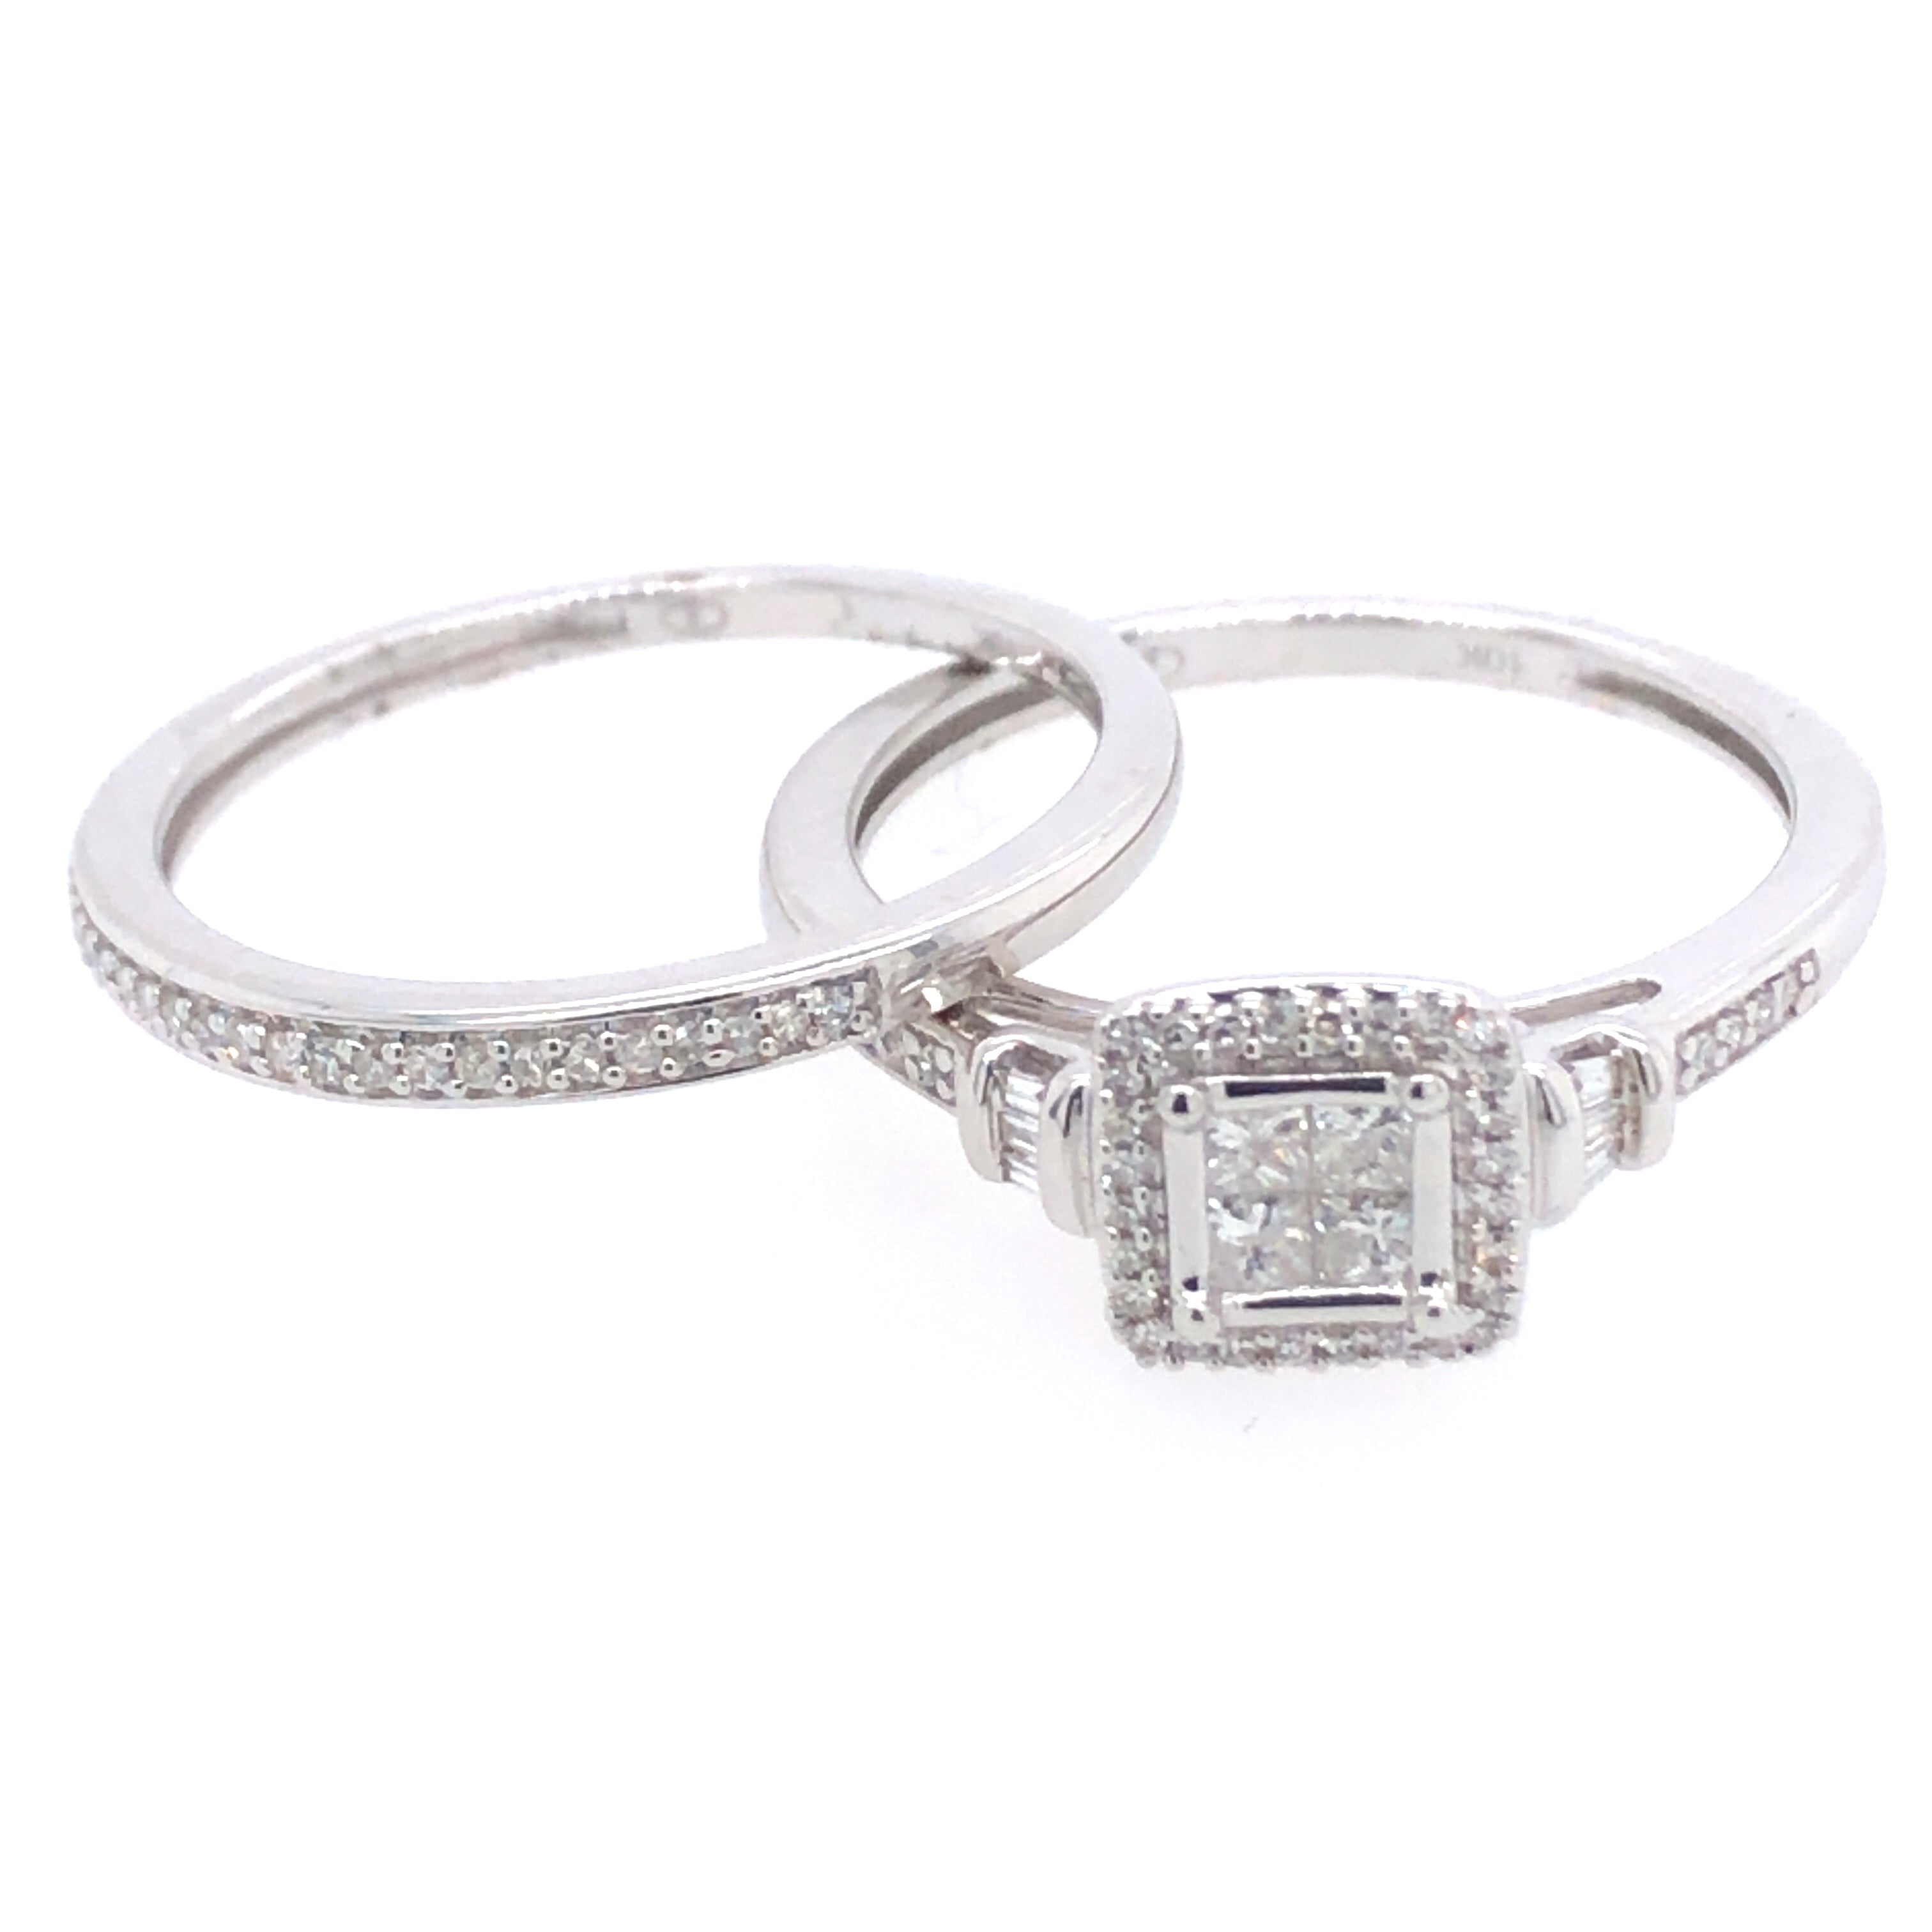 Style: Halo Inspired Description: Wedding Set - Diamond Engagement Ring Set